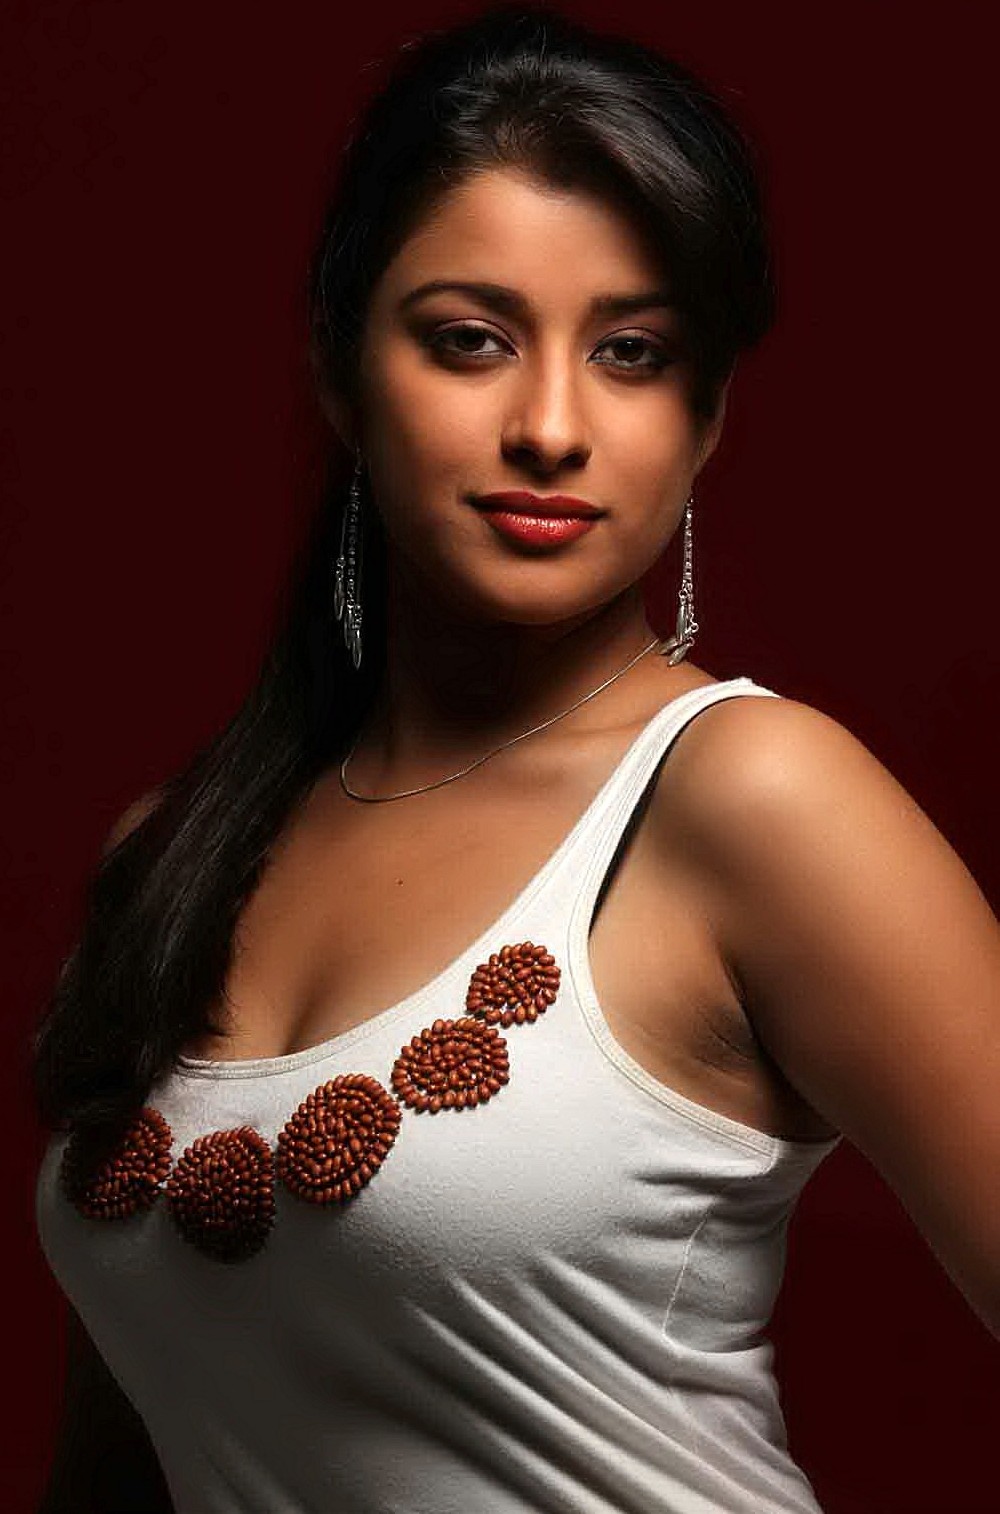 Madhurima Banerjee Pussy - Beauty Galore HD : Madhurima Banerjee Very Hot Cleavage In Sleeveless Top